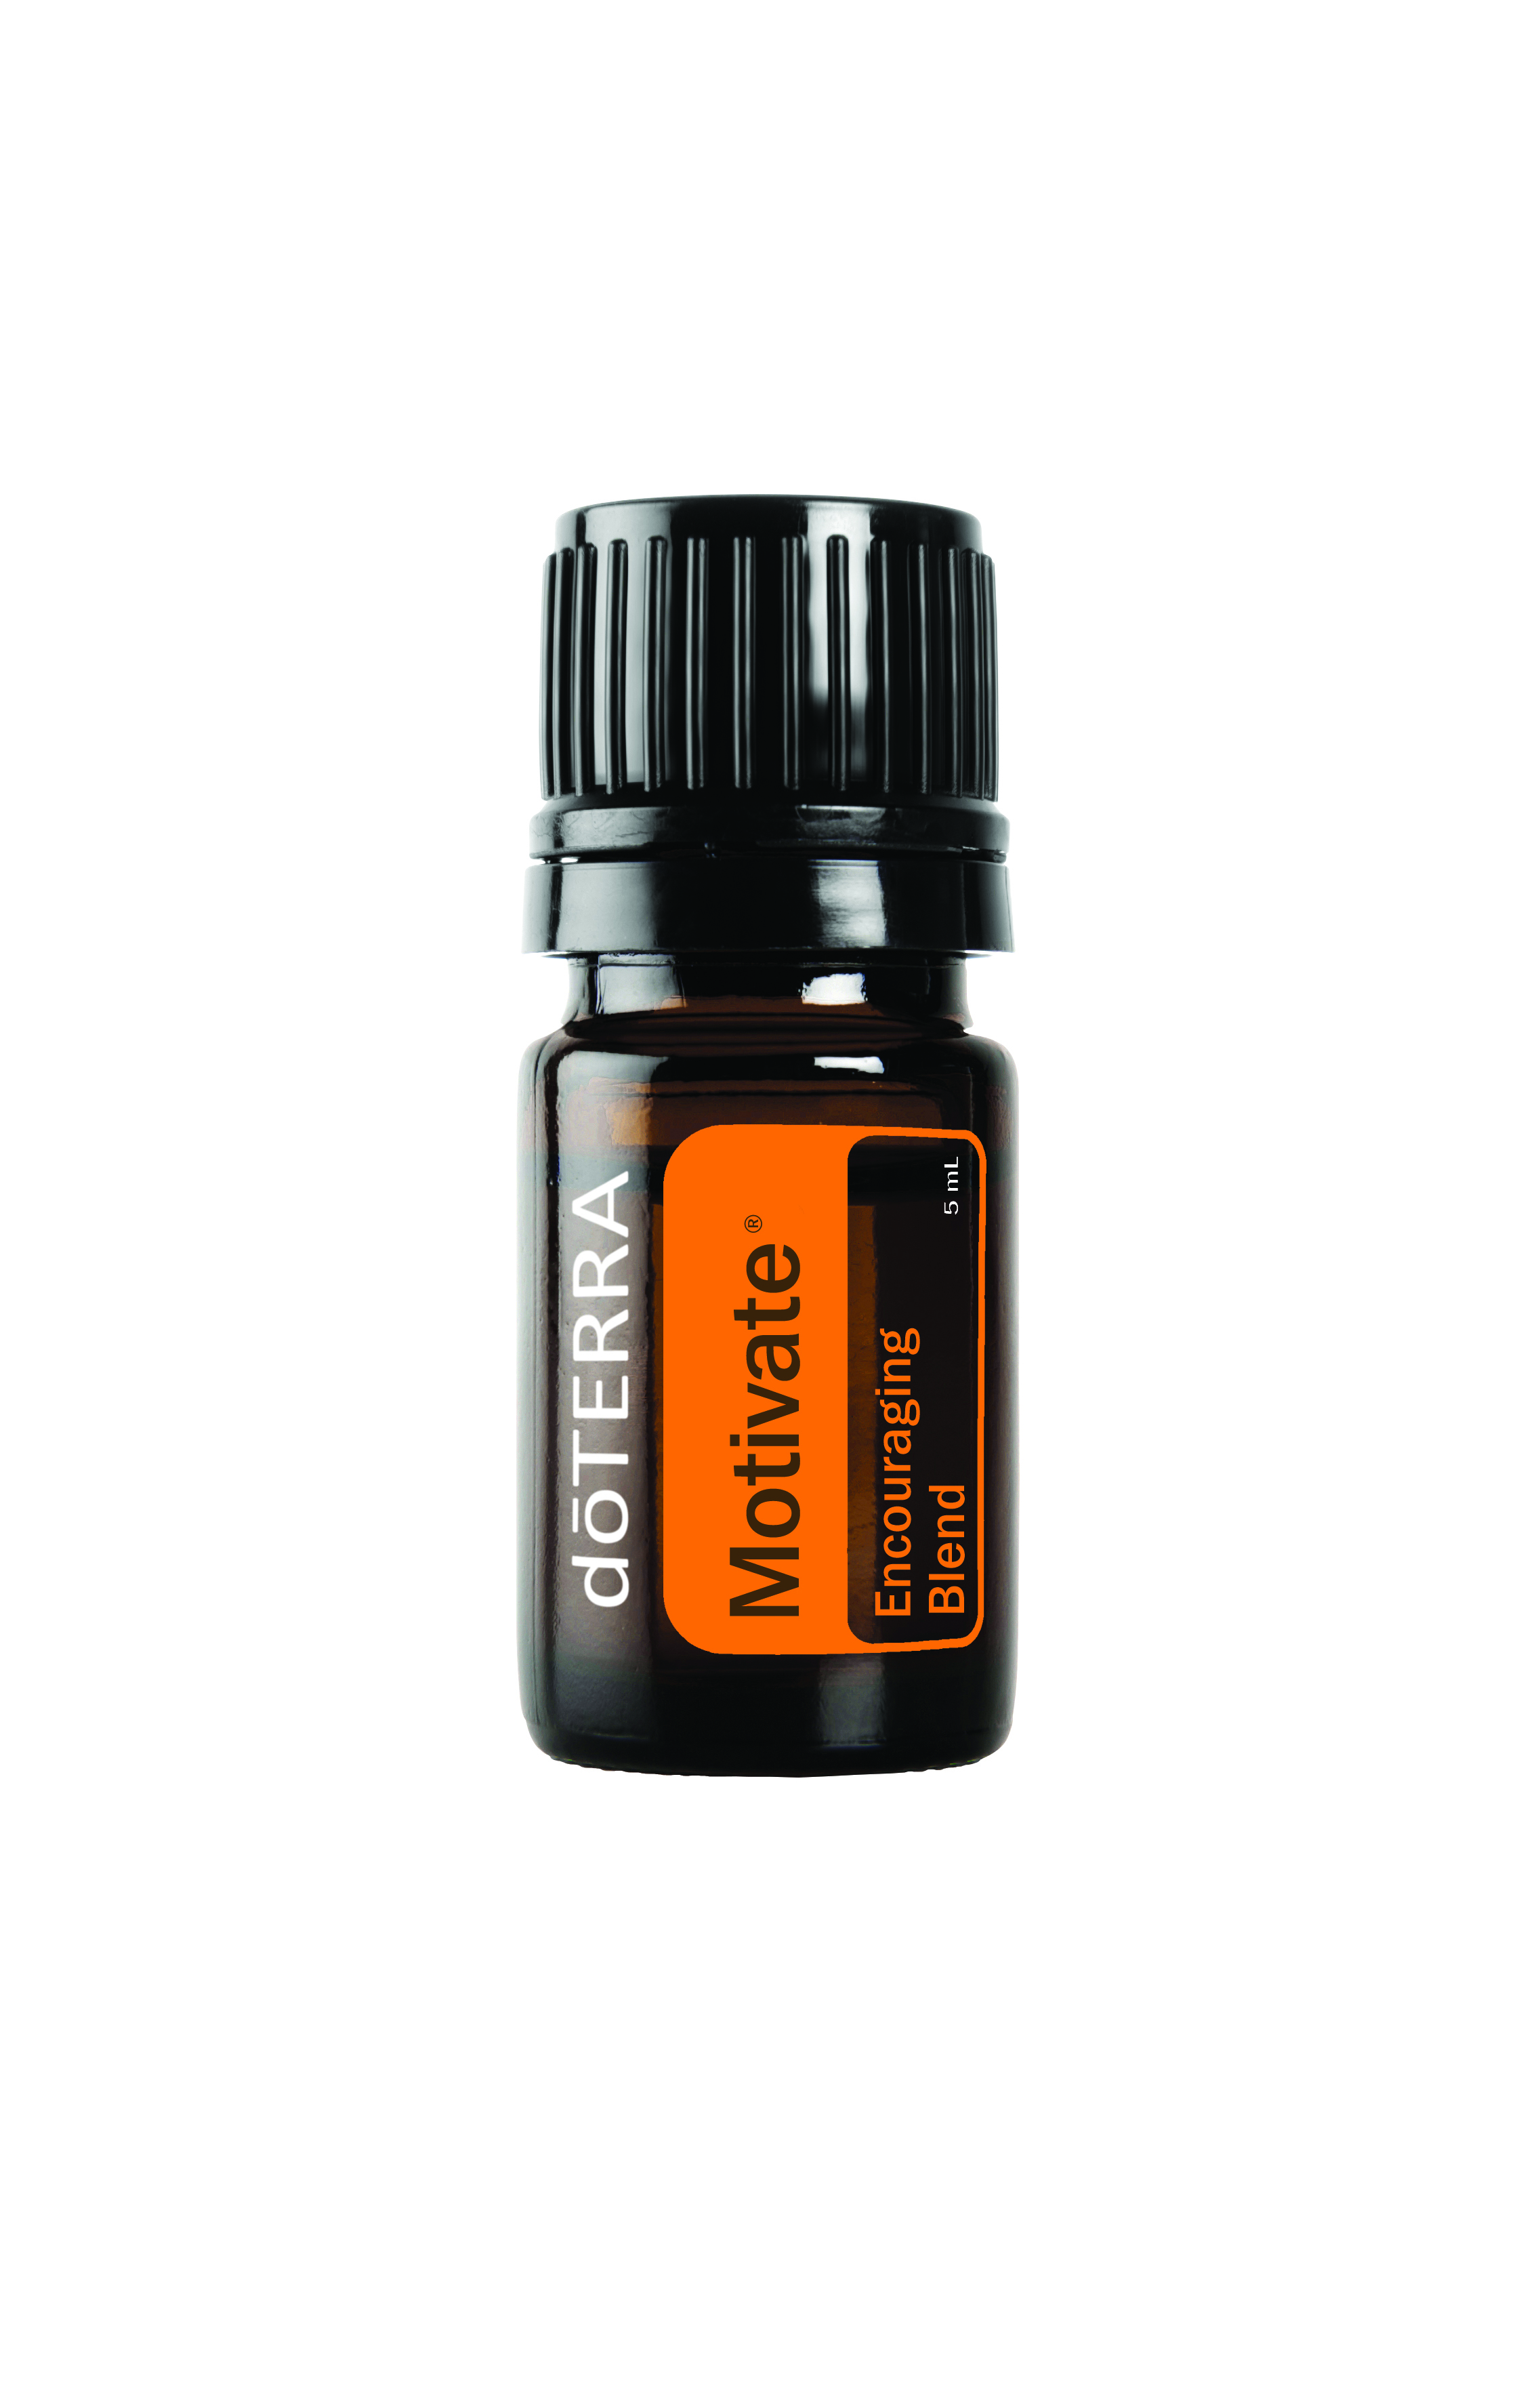 Doterra - Motivate Essential Oil Encouraging Blend - 5 ml